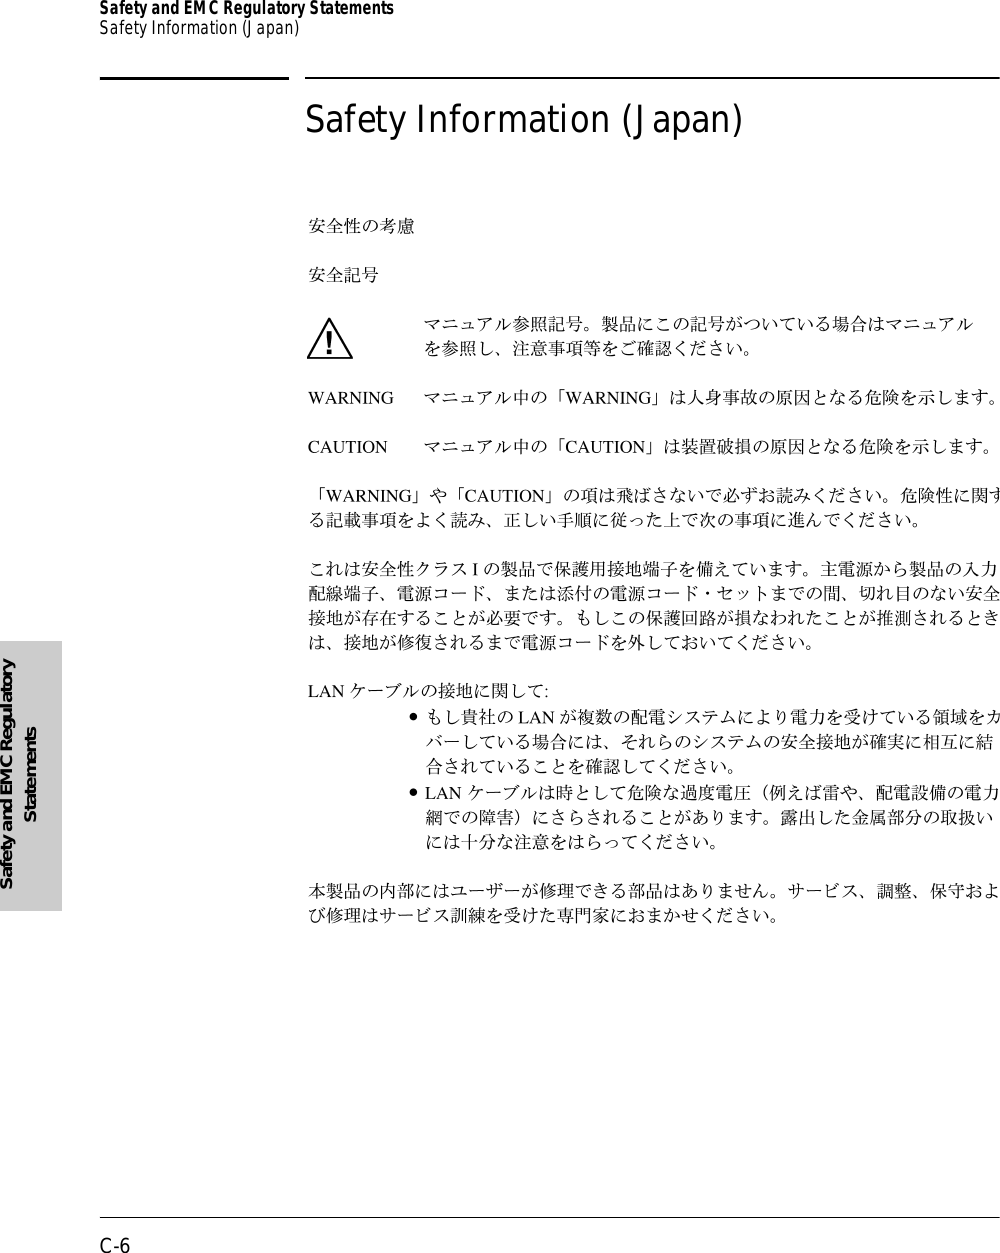 C-6Safety and EMC Regulatory StatementsSafety Information (Japan)Safety and EMC Regulatory StatementsSafety Information (Japan)